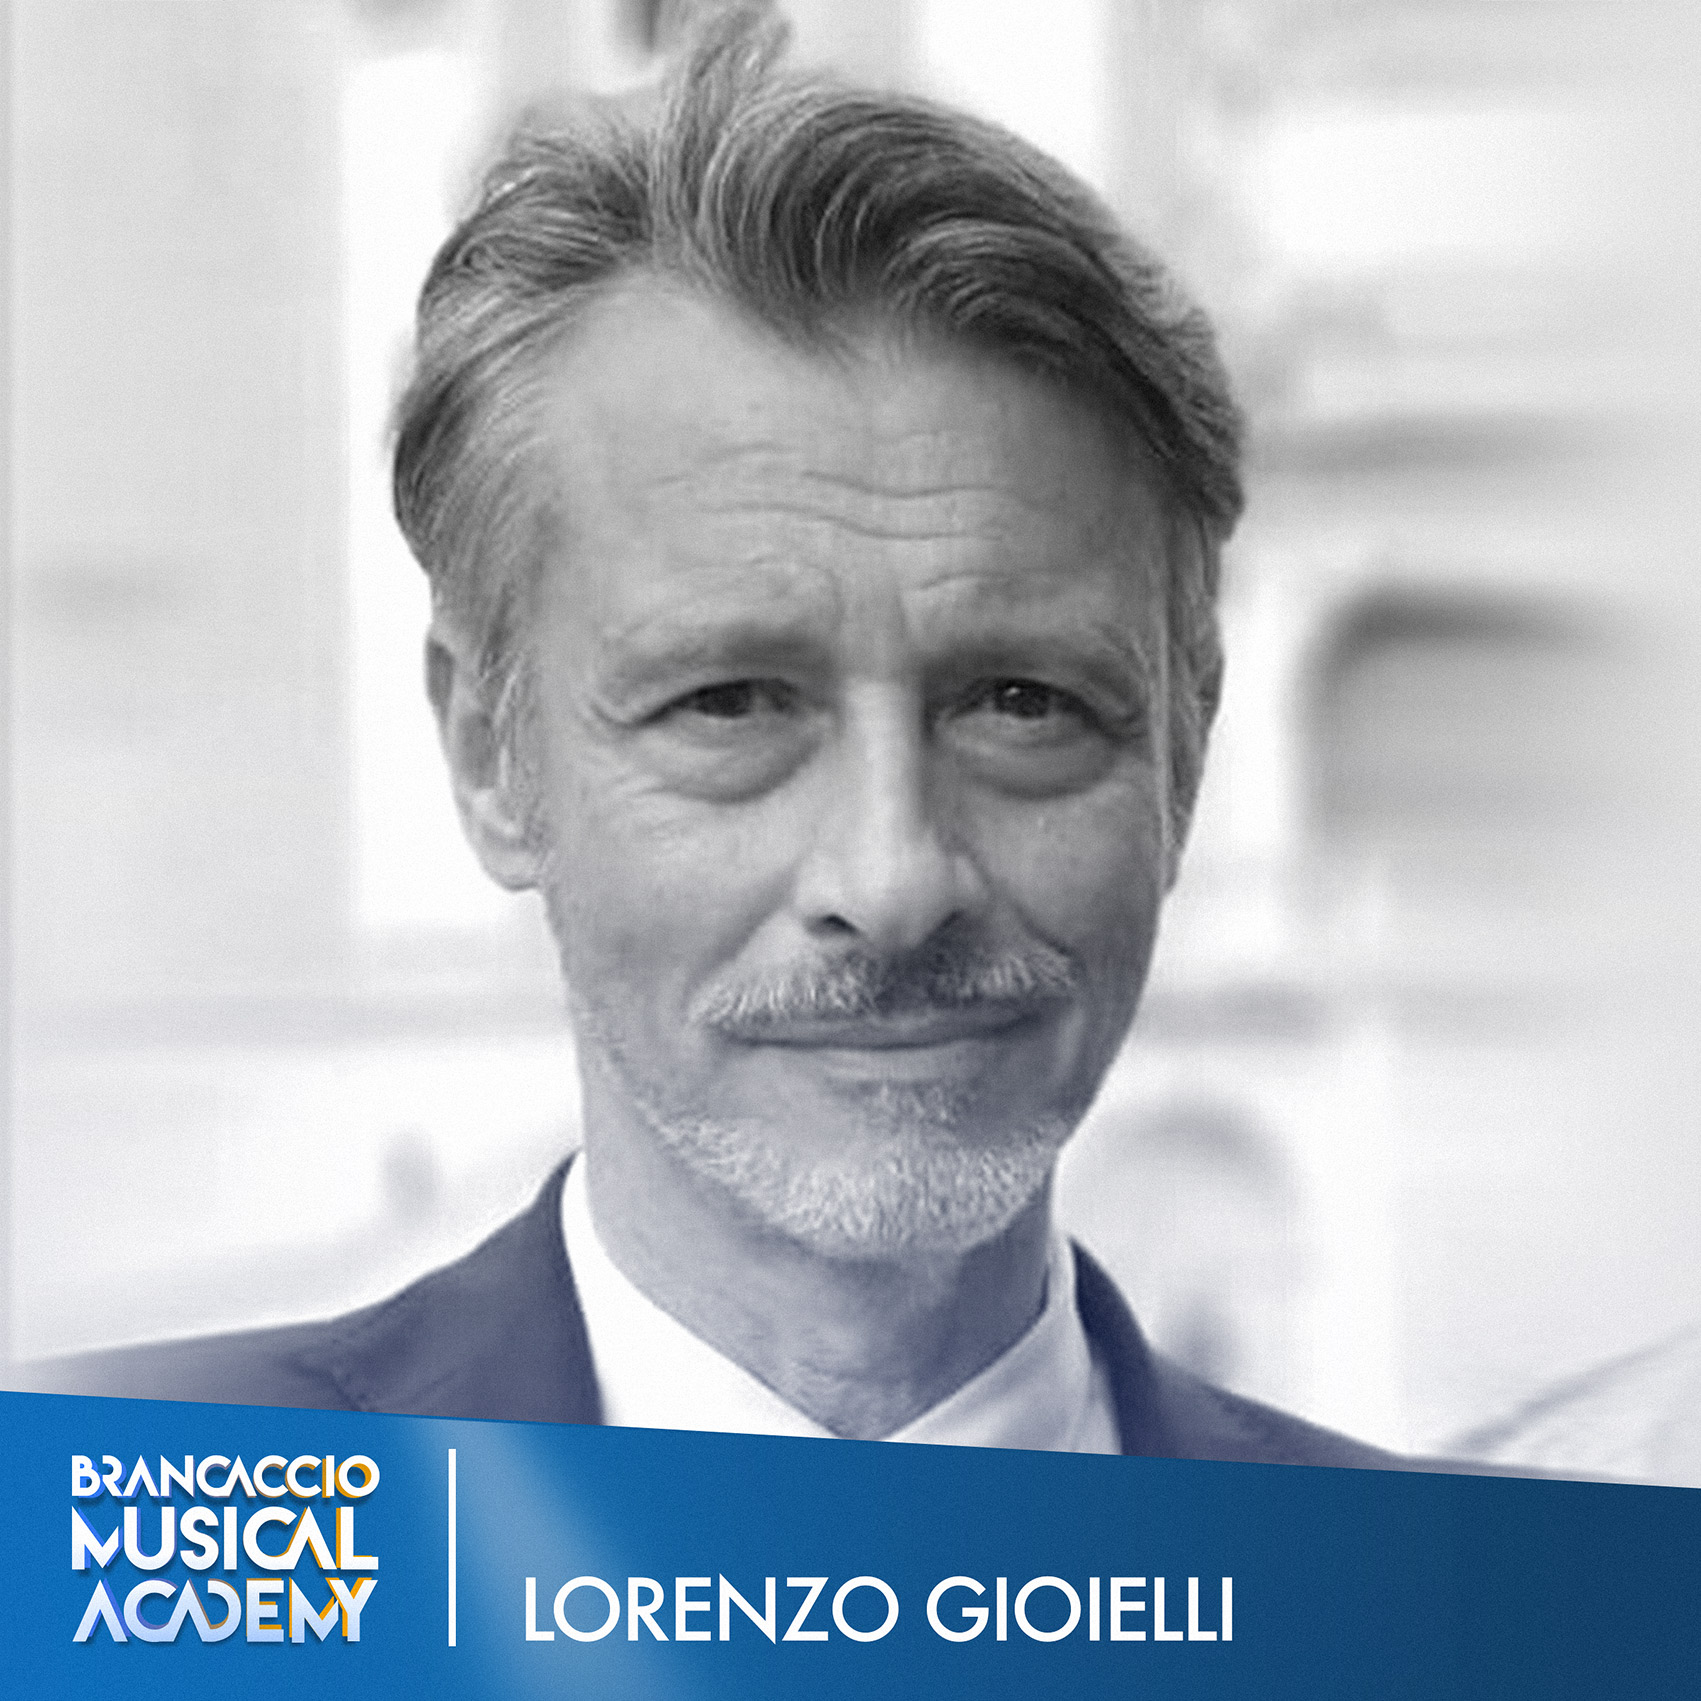 Lorenzo Gioielli